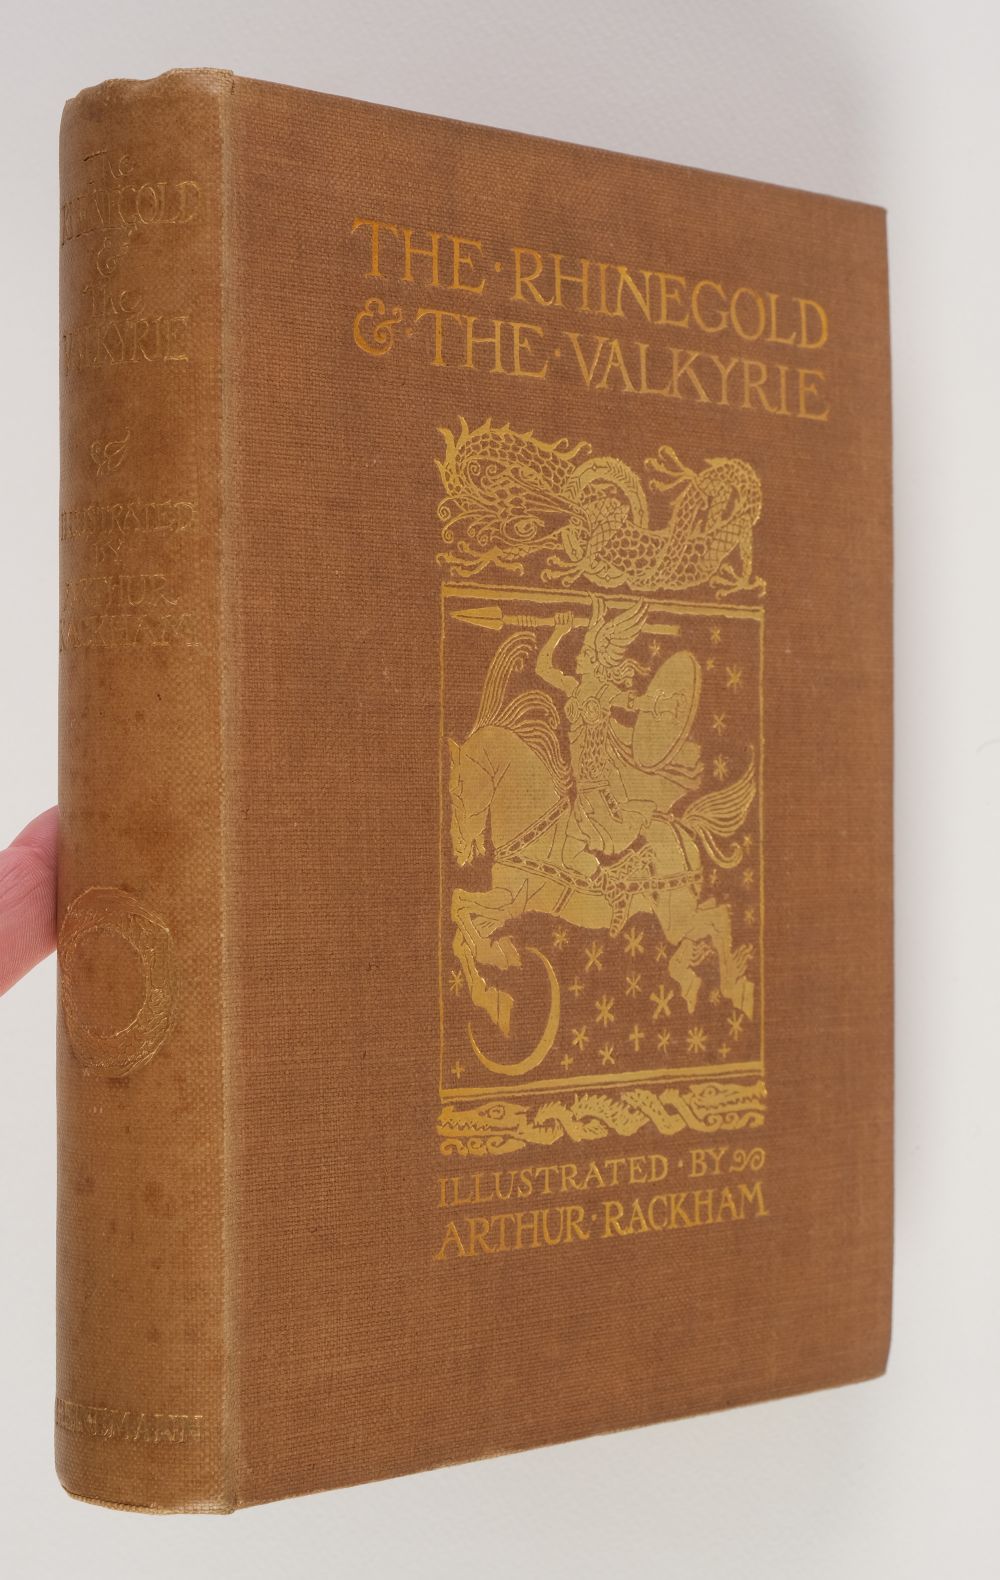 Rackham (Arthur, illustrator). The Rhinegold & The Valkyrie, London: William Heinemann, 1910 - Image 4 of 5